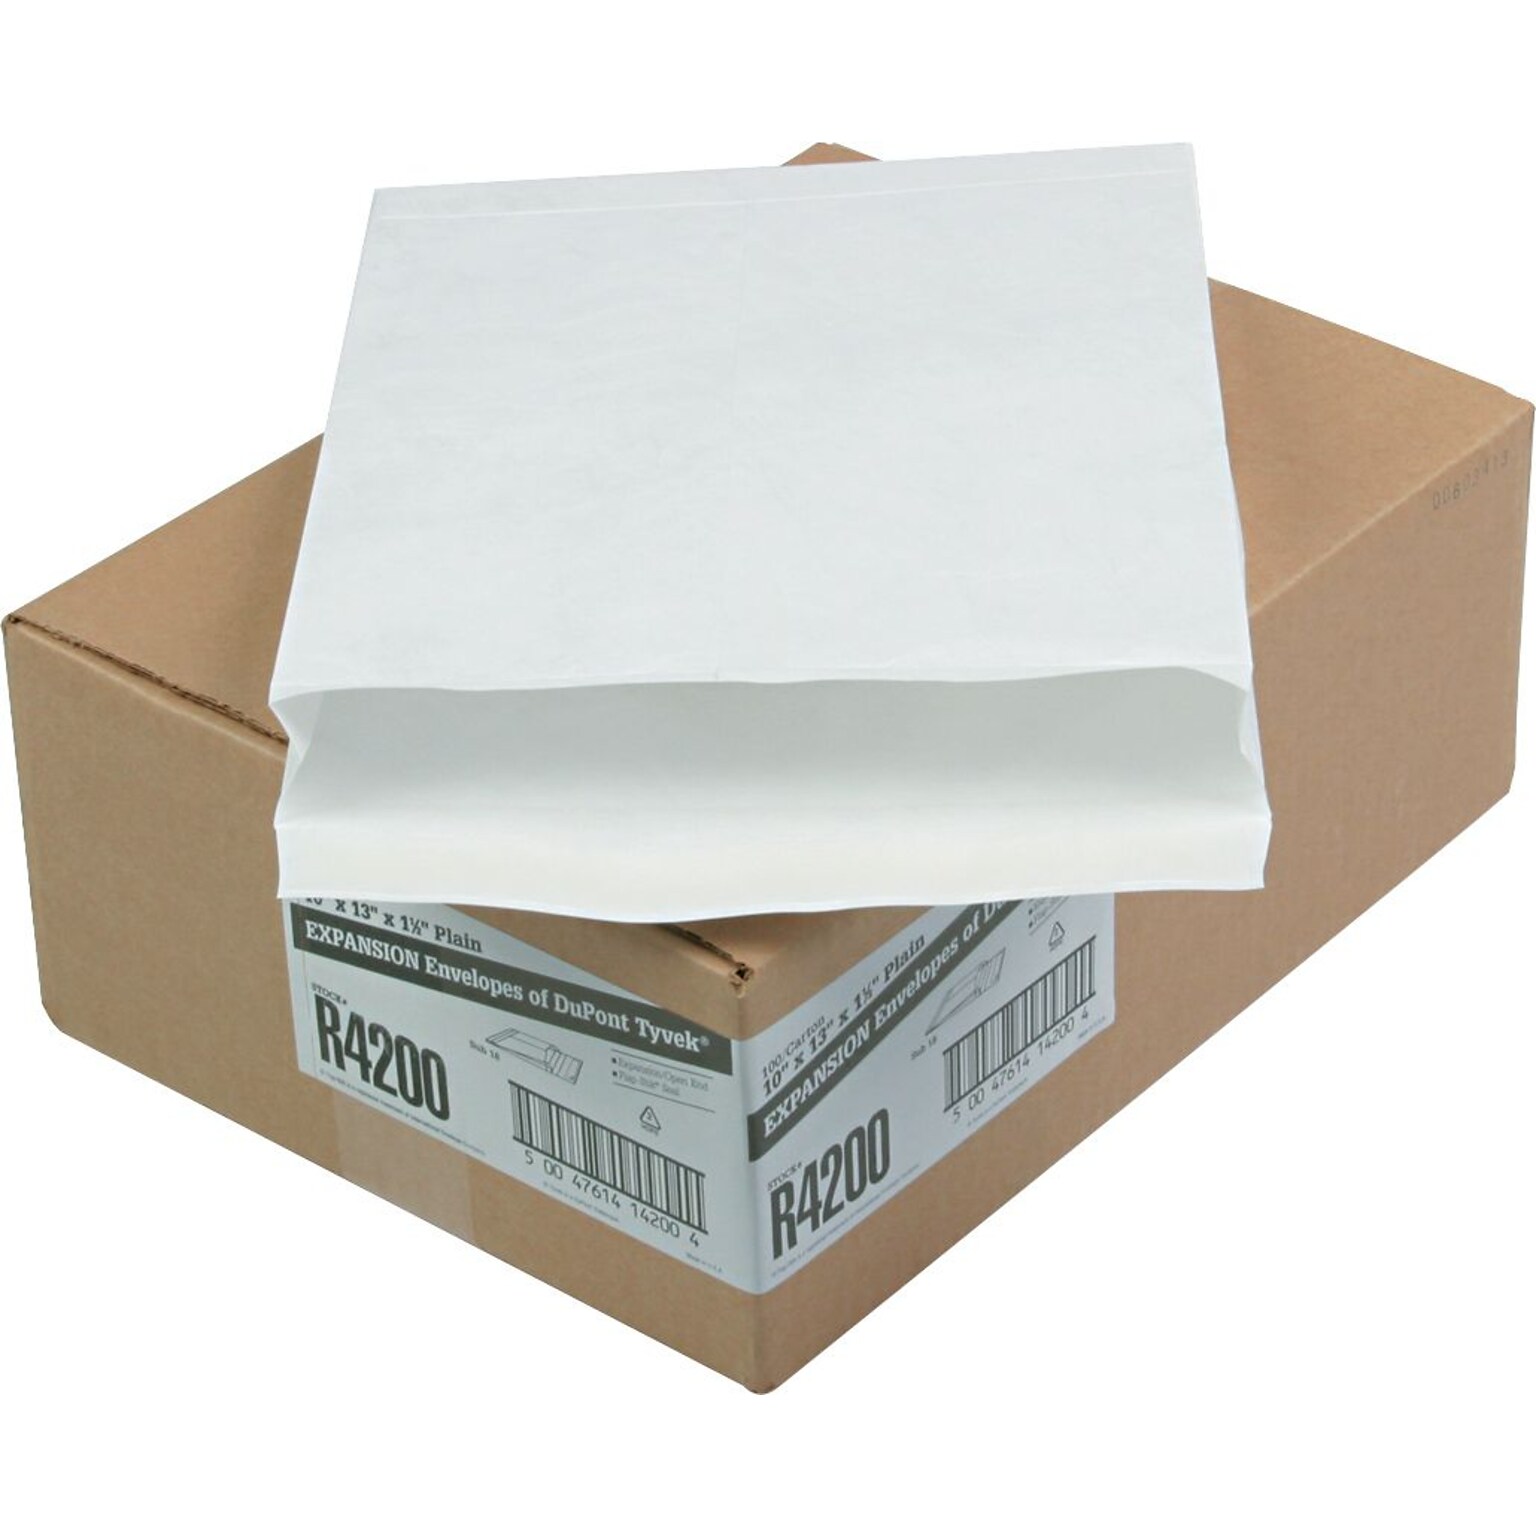 Quality Park Tyvek Expansion Self Seal #13 Catalog Envelope, 10 x 13 x 1 1/2, White, 100/Carton (R4200)